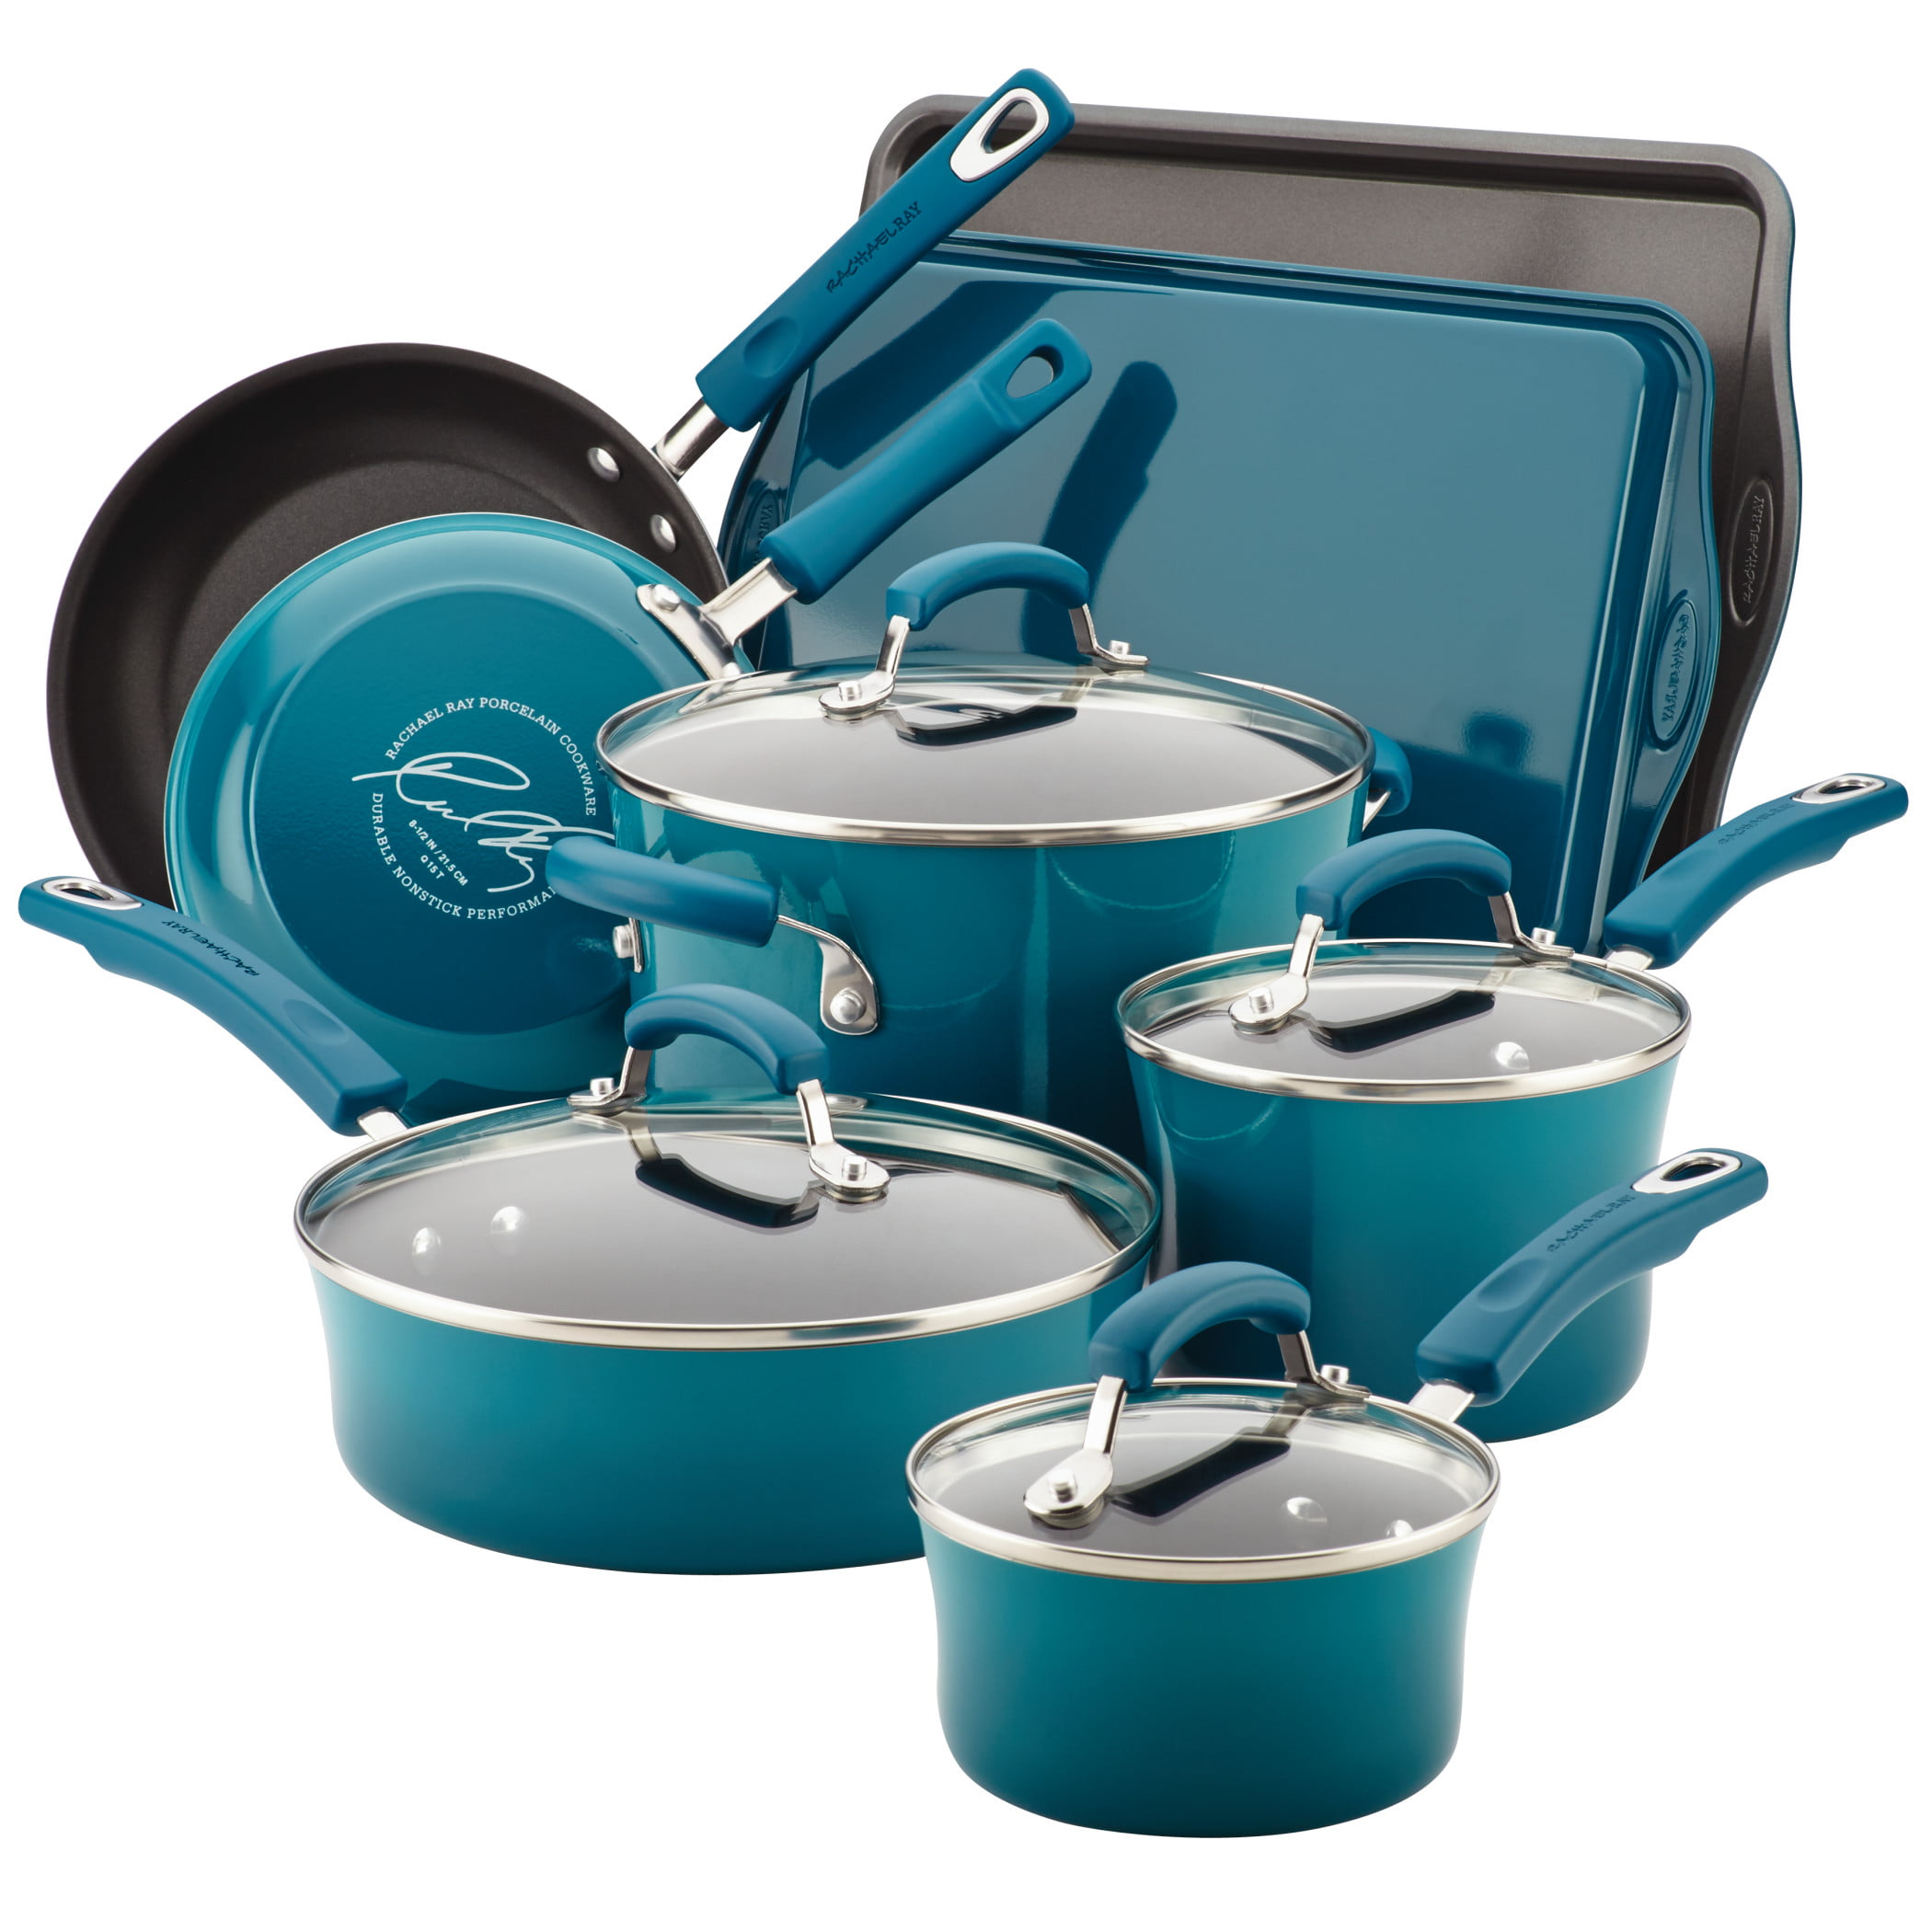 Wayfair Basics 12 Piece Stainless Steel Cookware Set Color: Blue 7447BAE07FBA4894877B9FB0D658302A